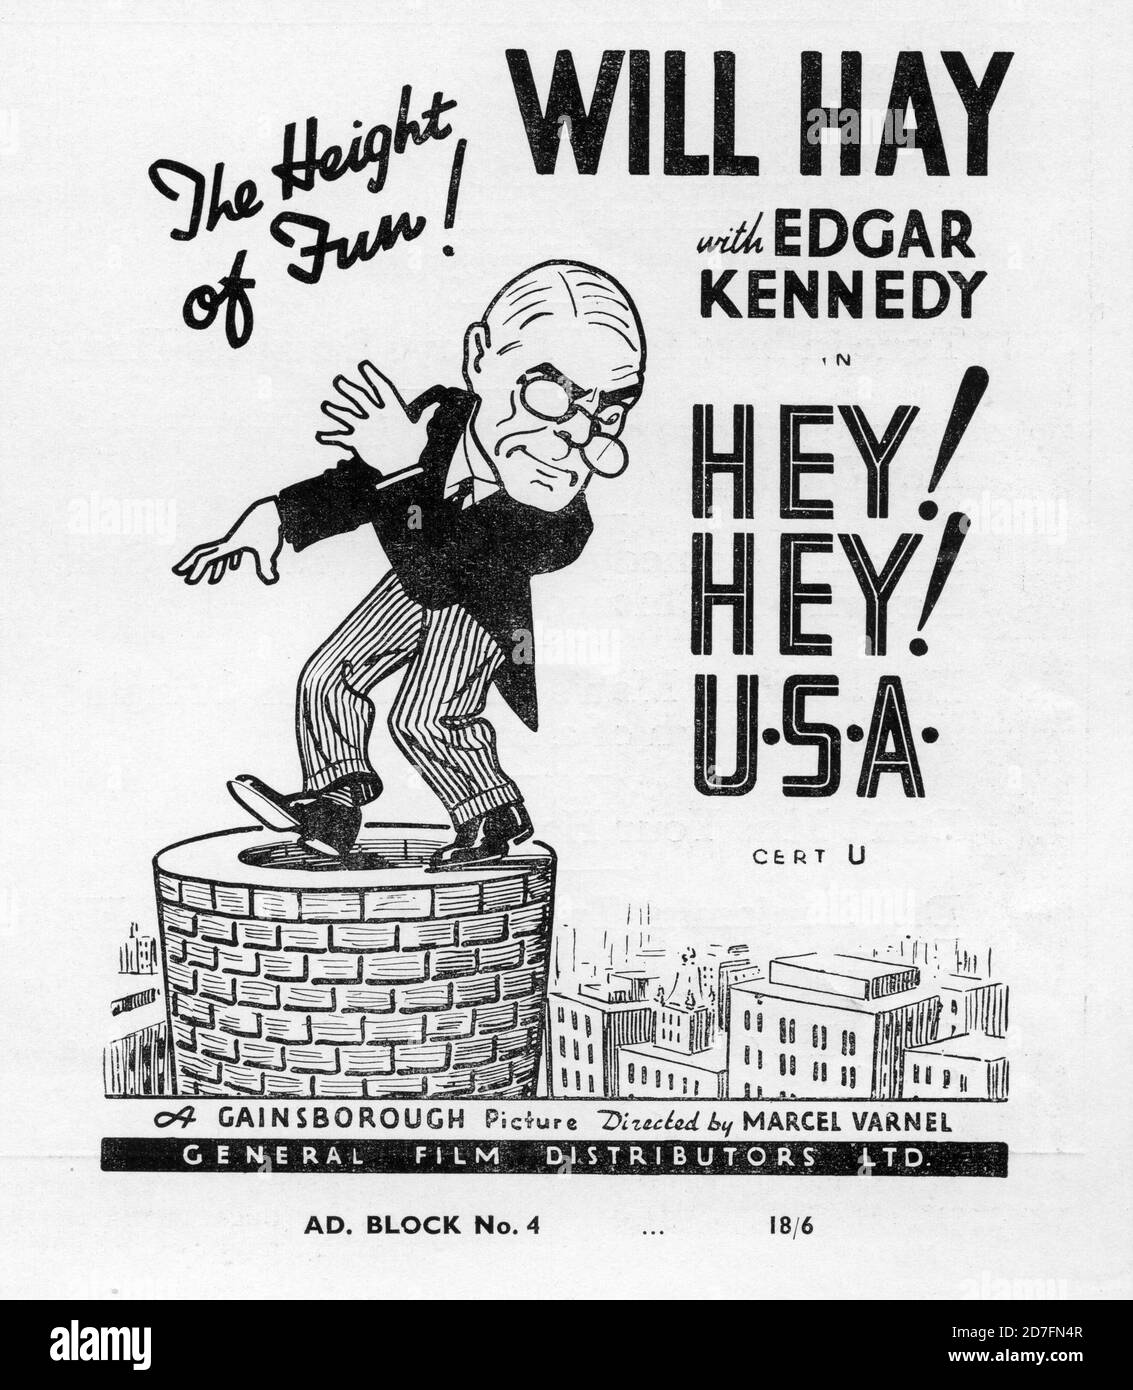 WIRD HEU IN HEY ! HEY! USA 1938 Regisseur MARCEL VARNEL Gainsborough Pictures / General Film Distributors (GFD) Stockfoto